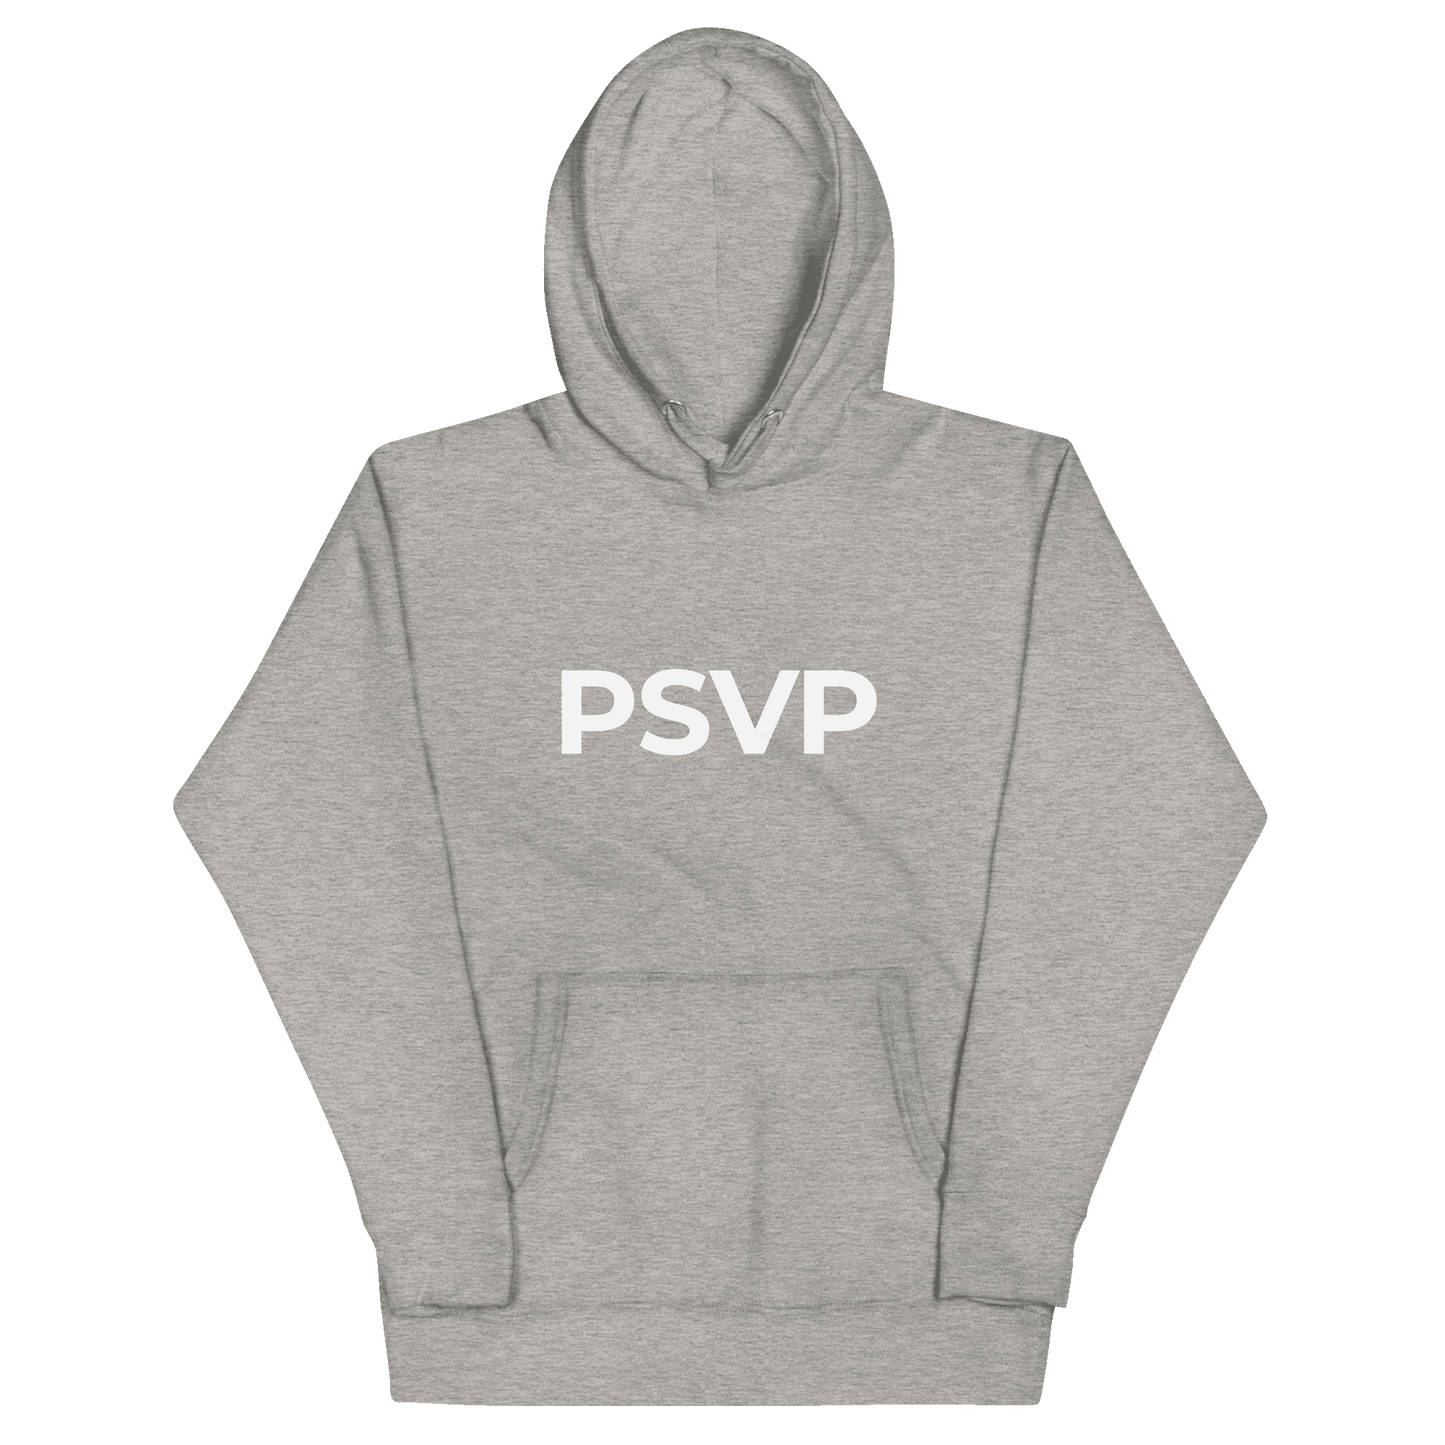 Soft Light Grey Hoodie - PSVP | Hoodie | PARADIS SVP